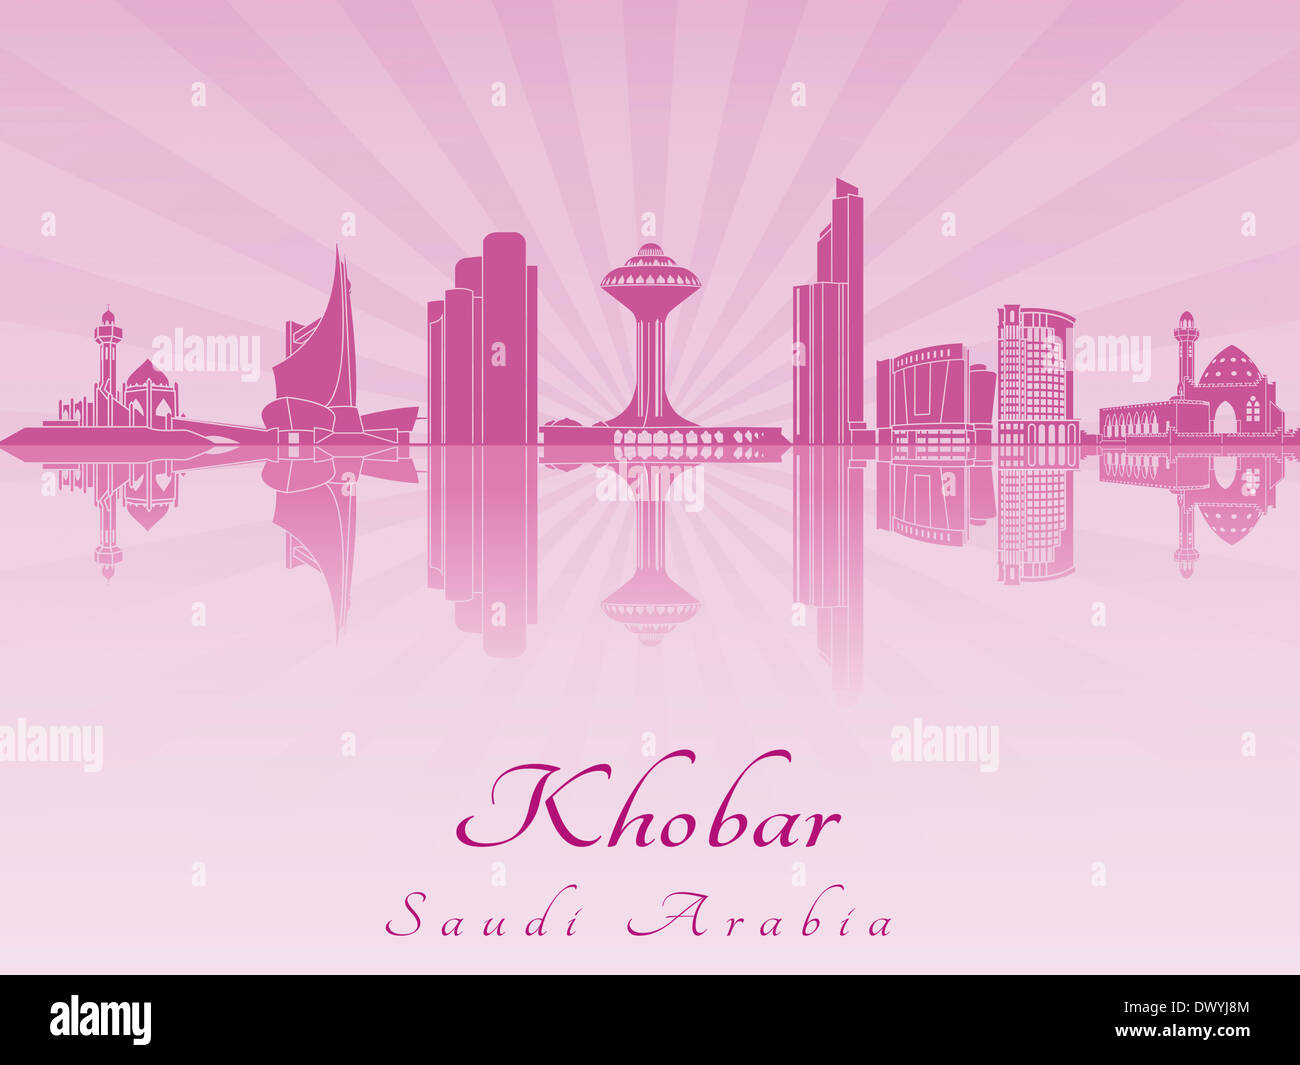 Khobar skyline in purple radiant Stock Photo